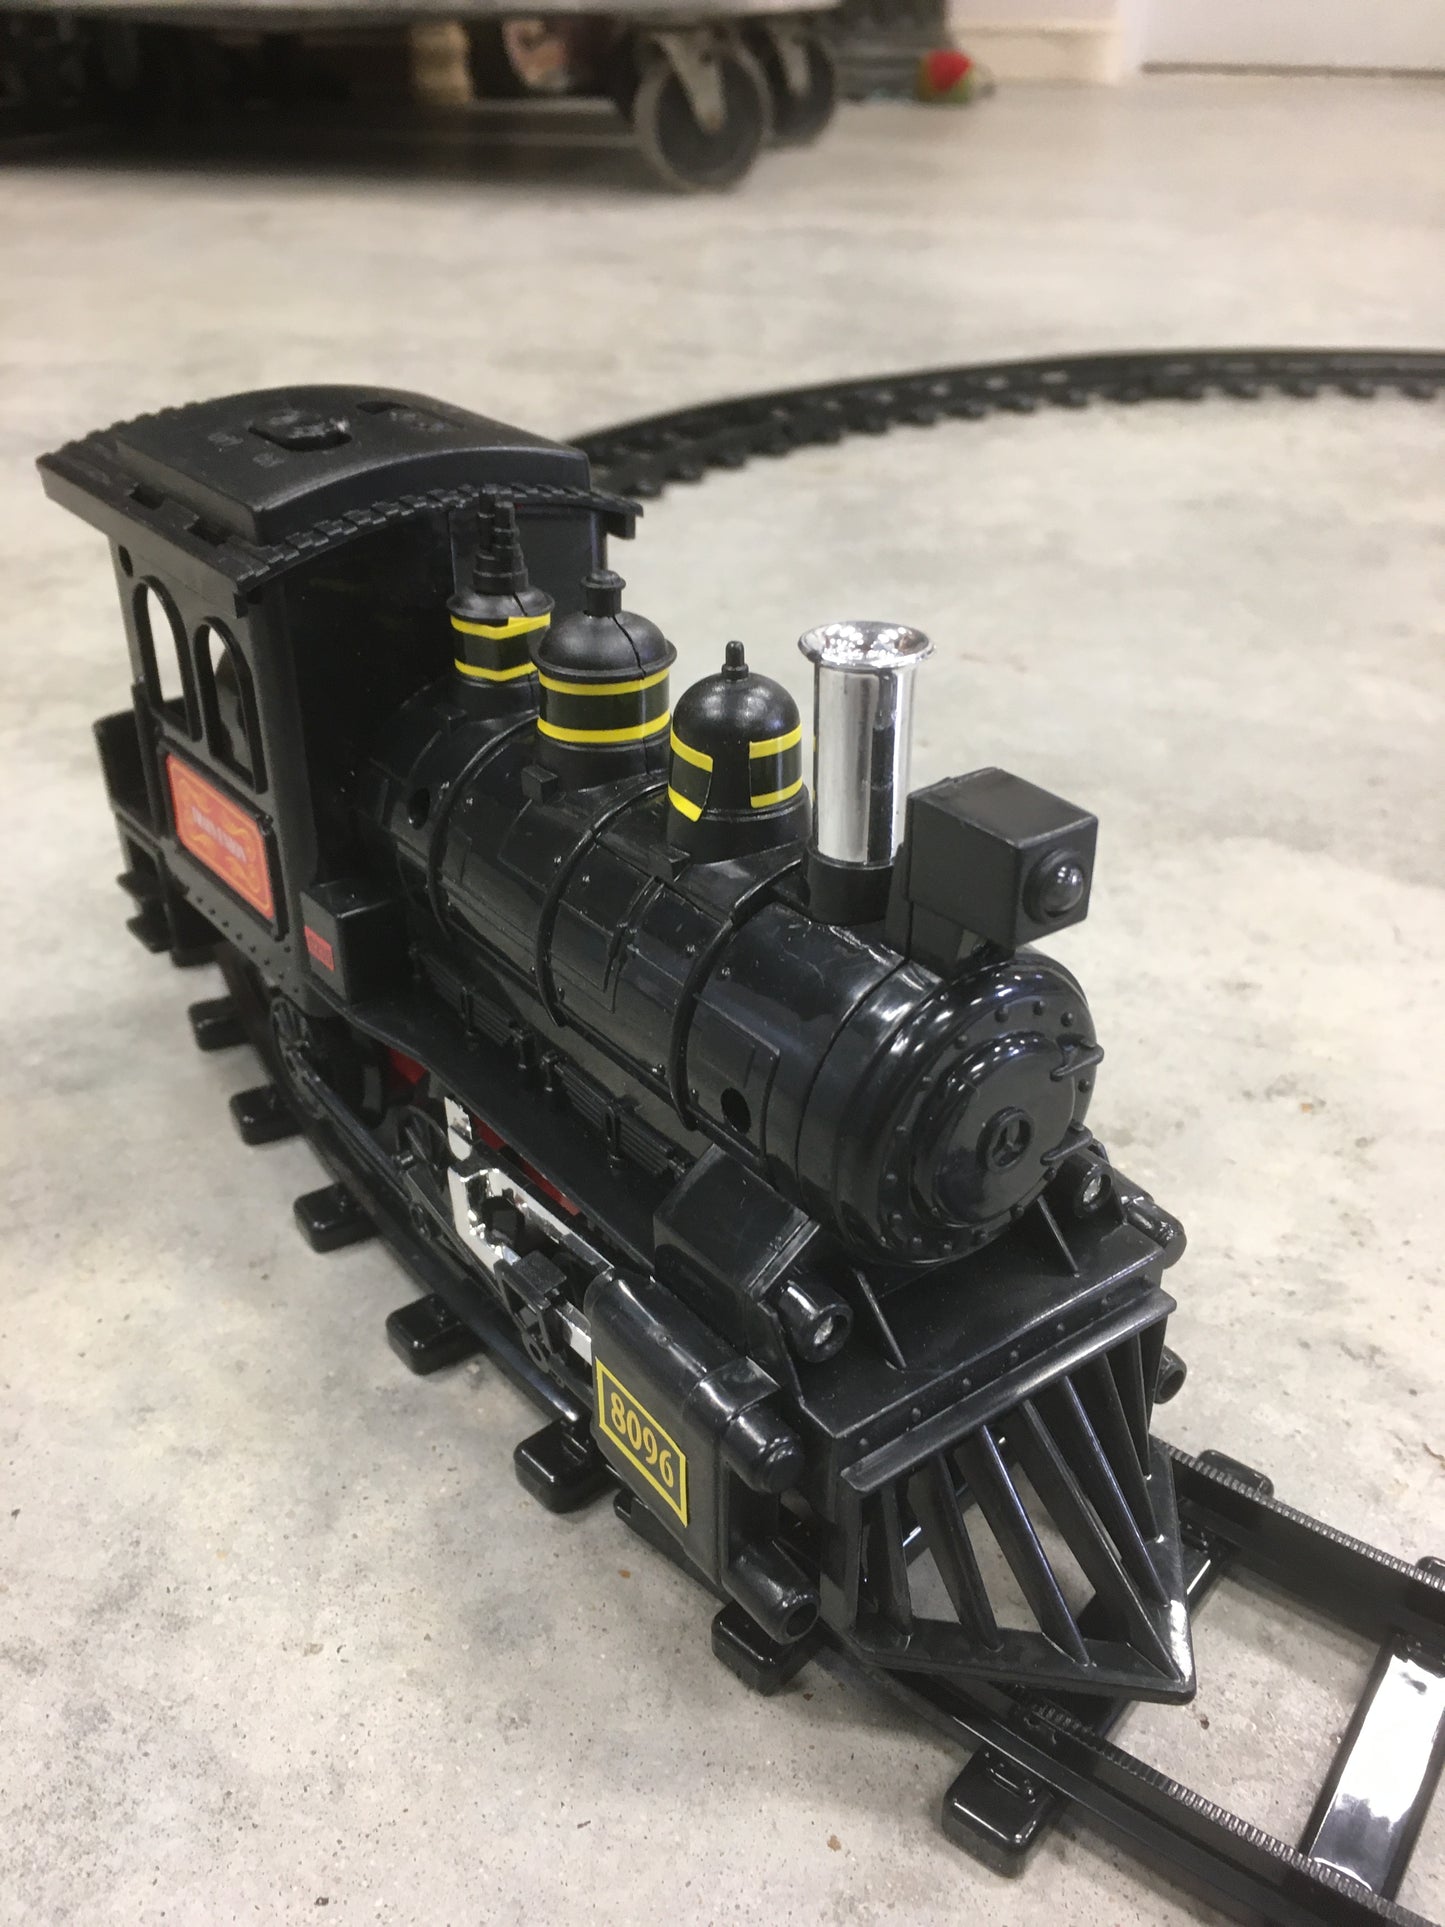 Stevenson Locomotive Train Engine with Track Pieces